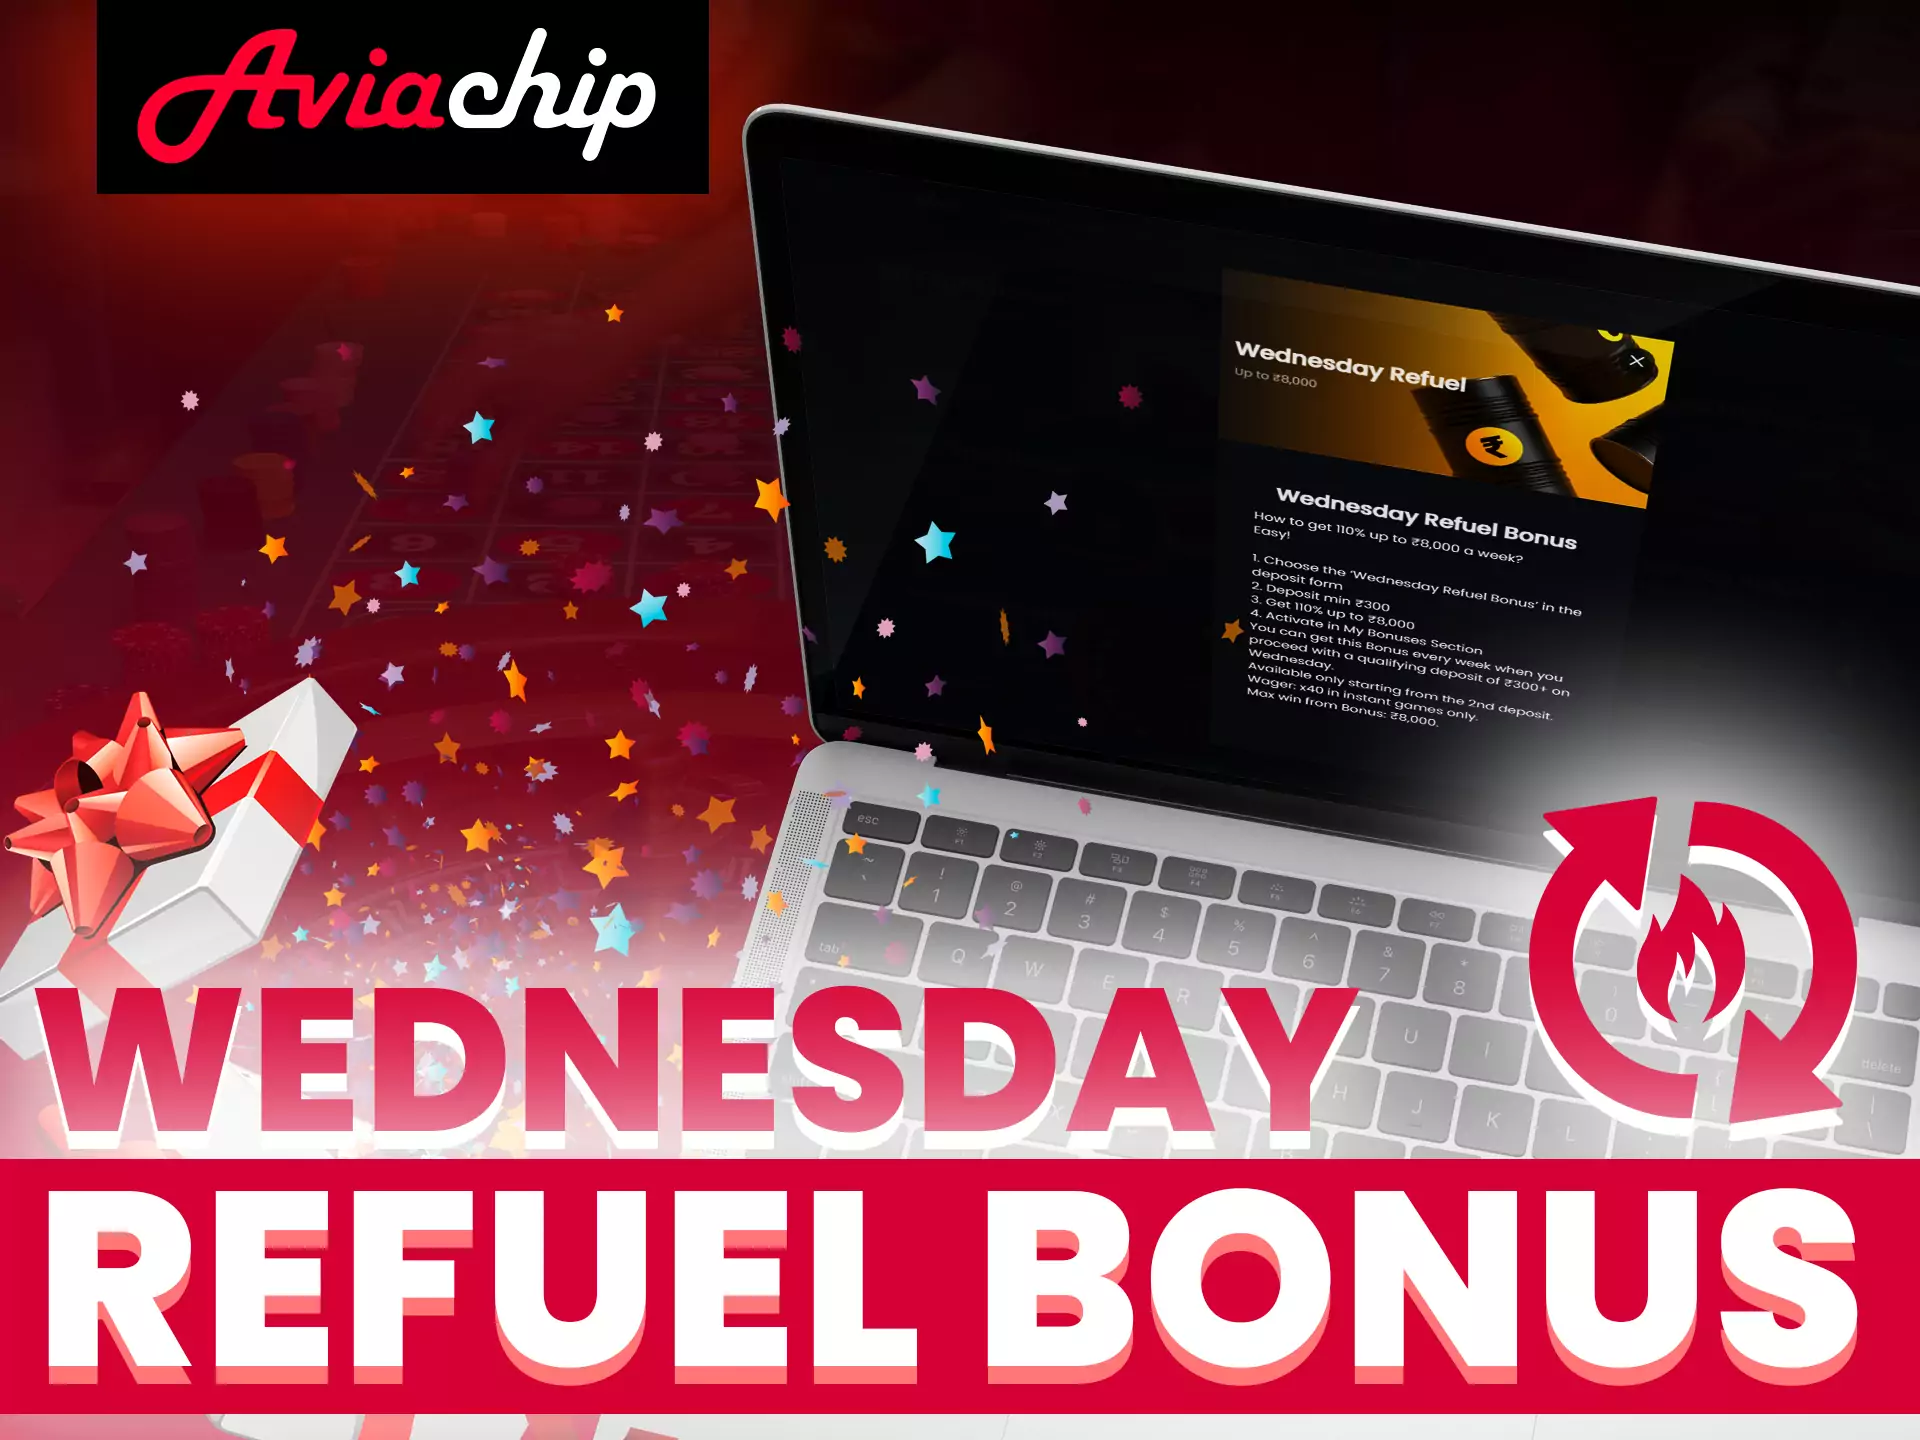 At Aviachip, take advantage of the refuel bonus every Wednesday.